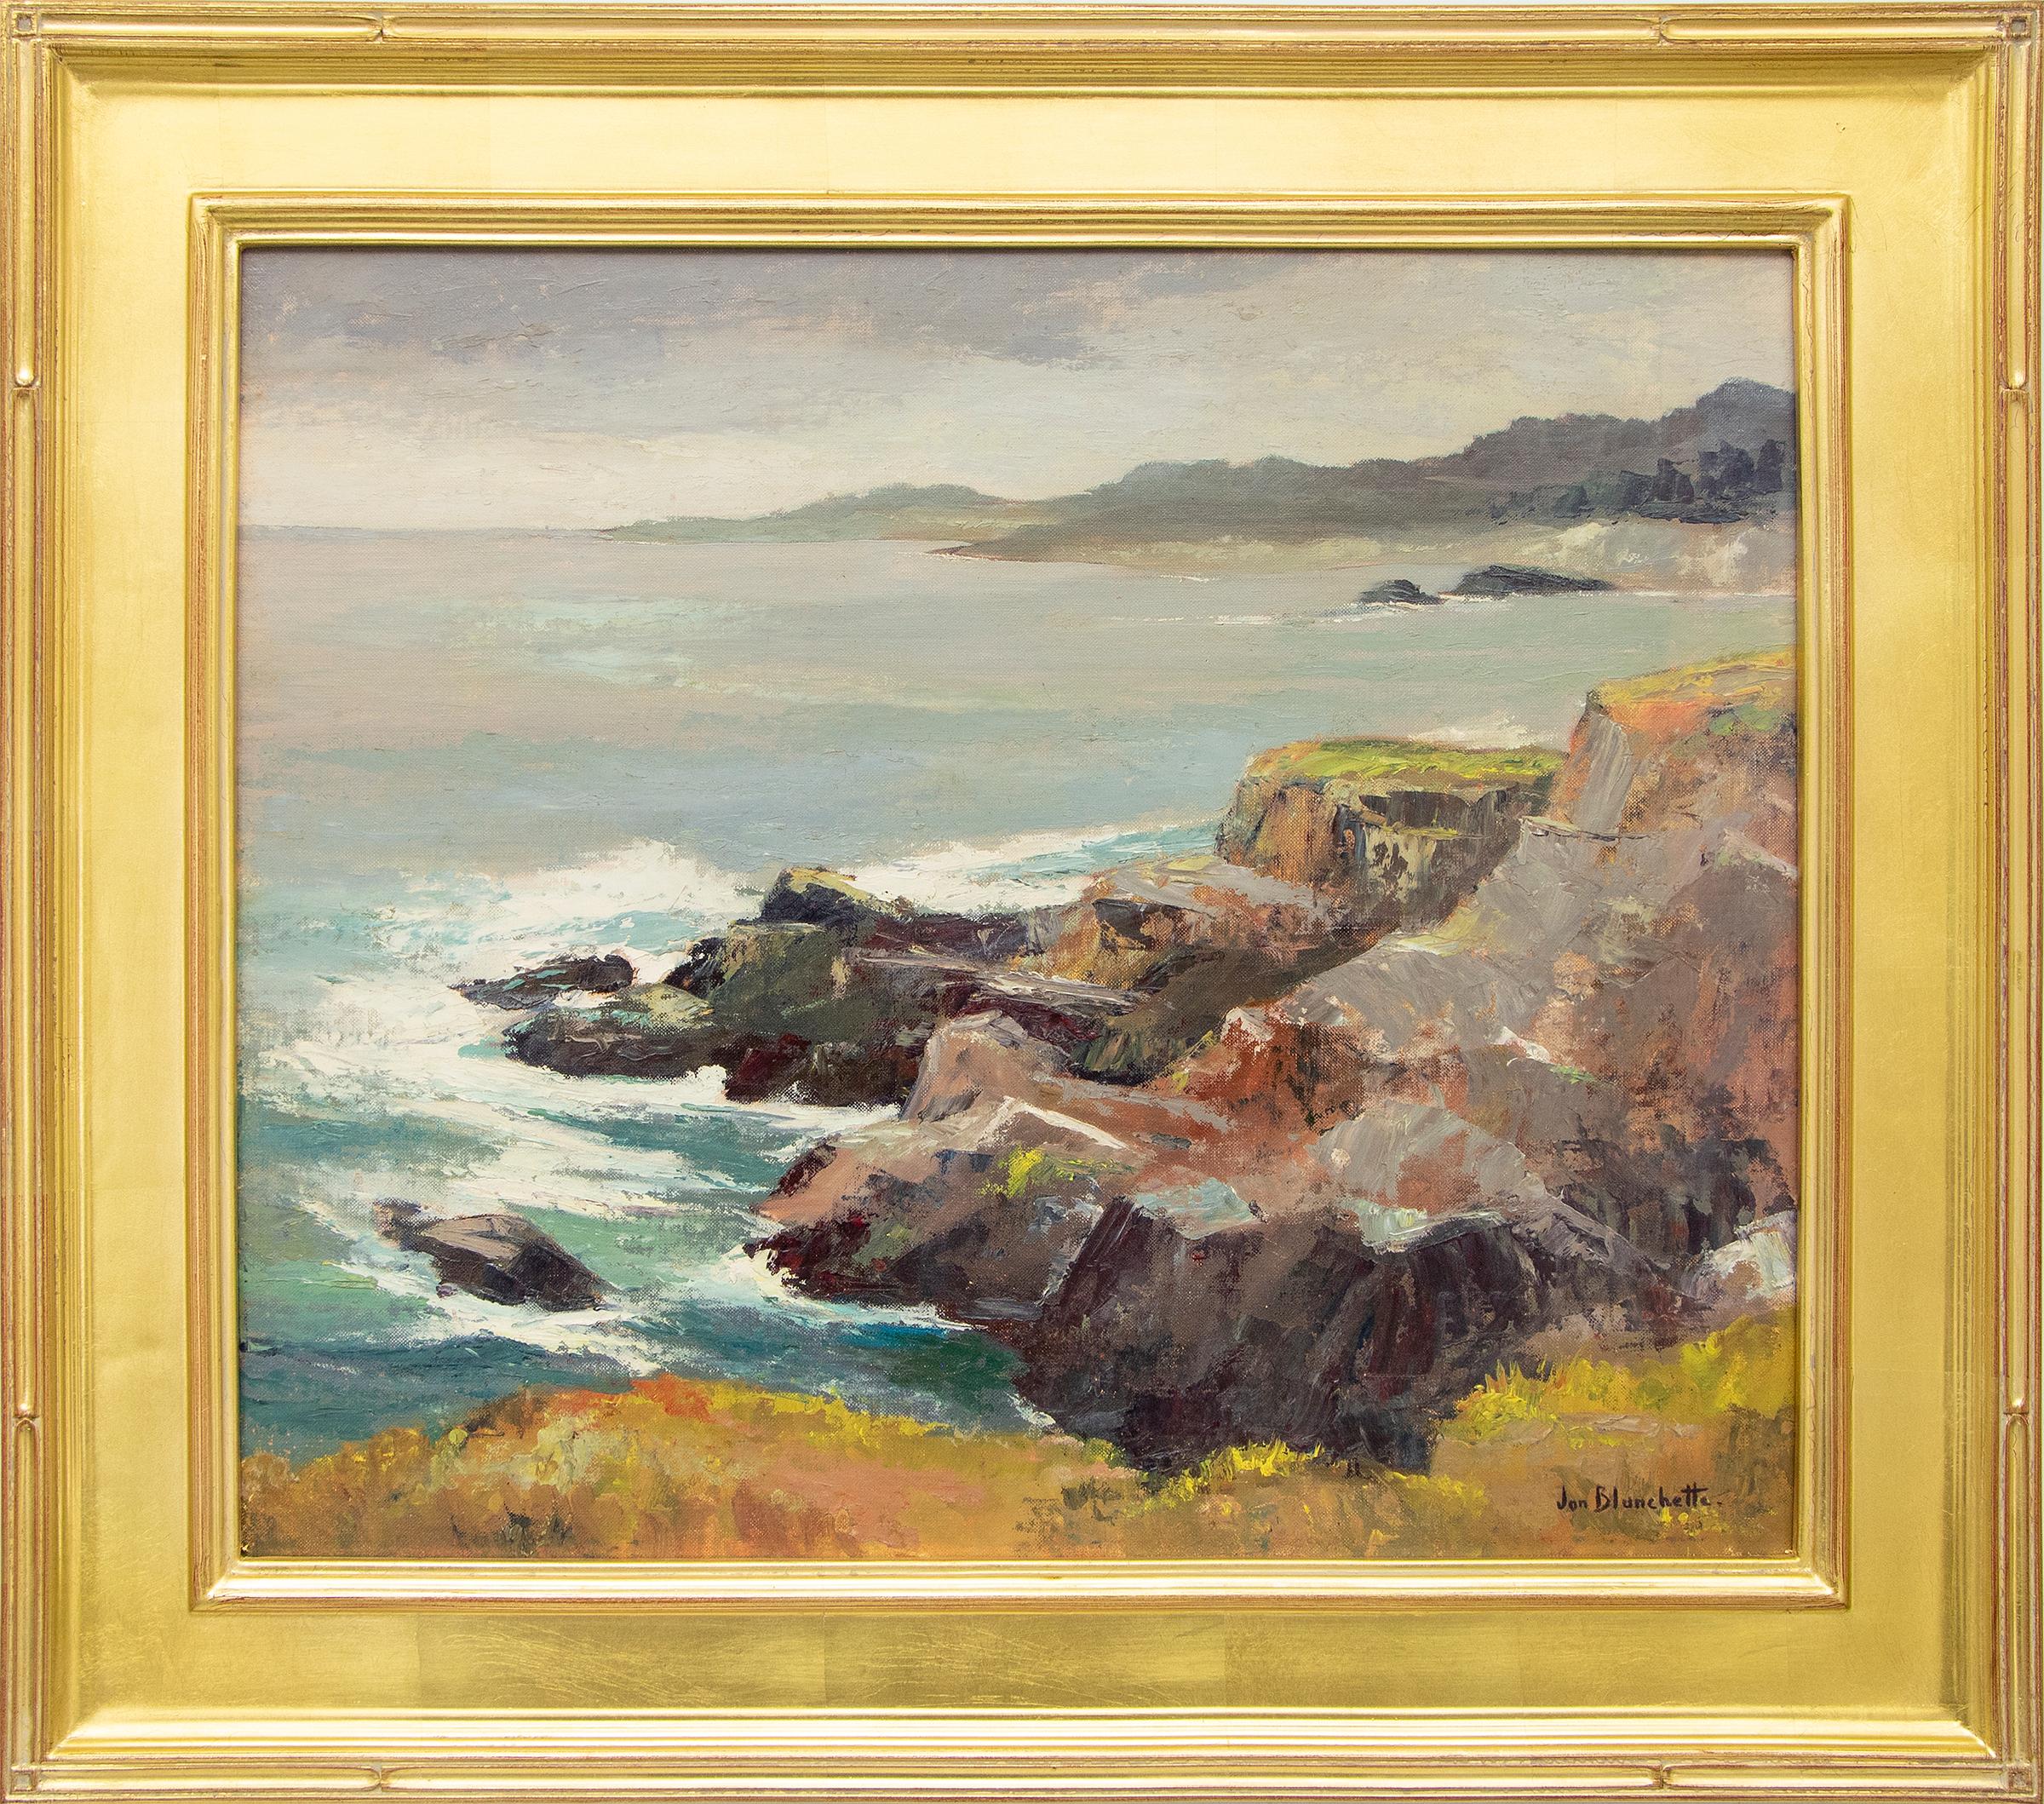 Jon Blanchette Figurative Painting - West of Mendocino, Northern California Coast Marine Seascape/Landscape Painting